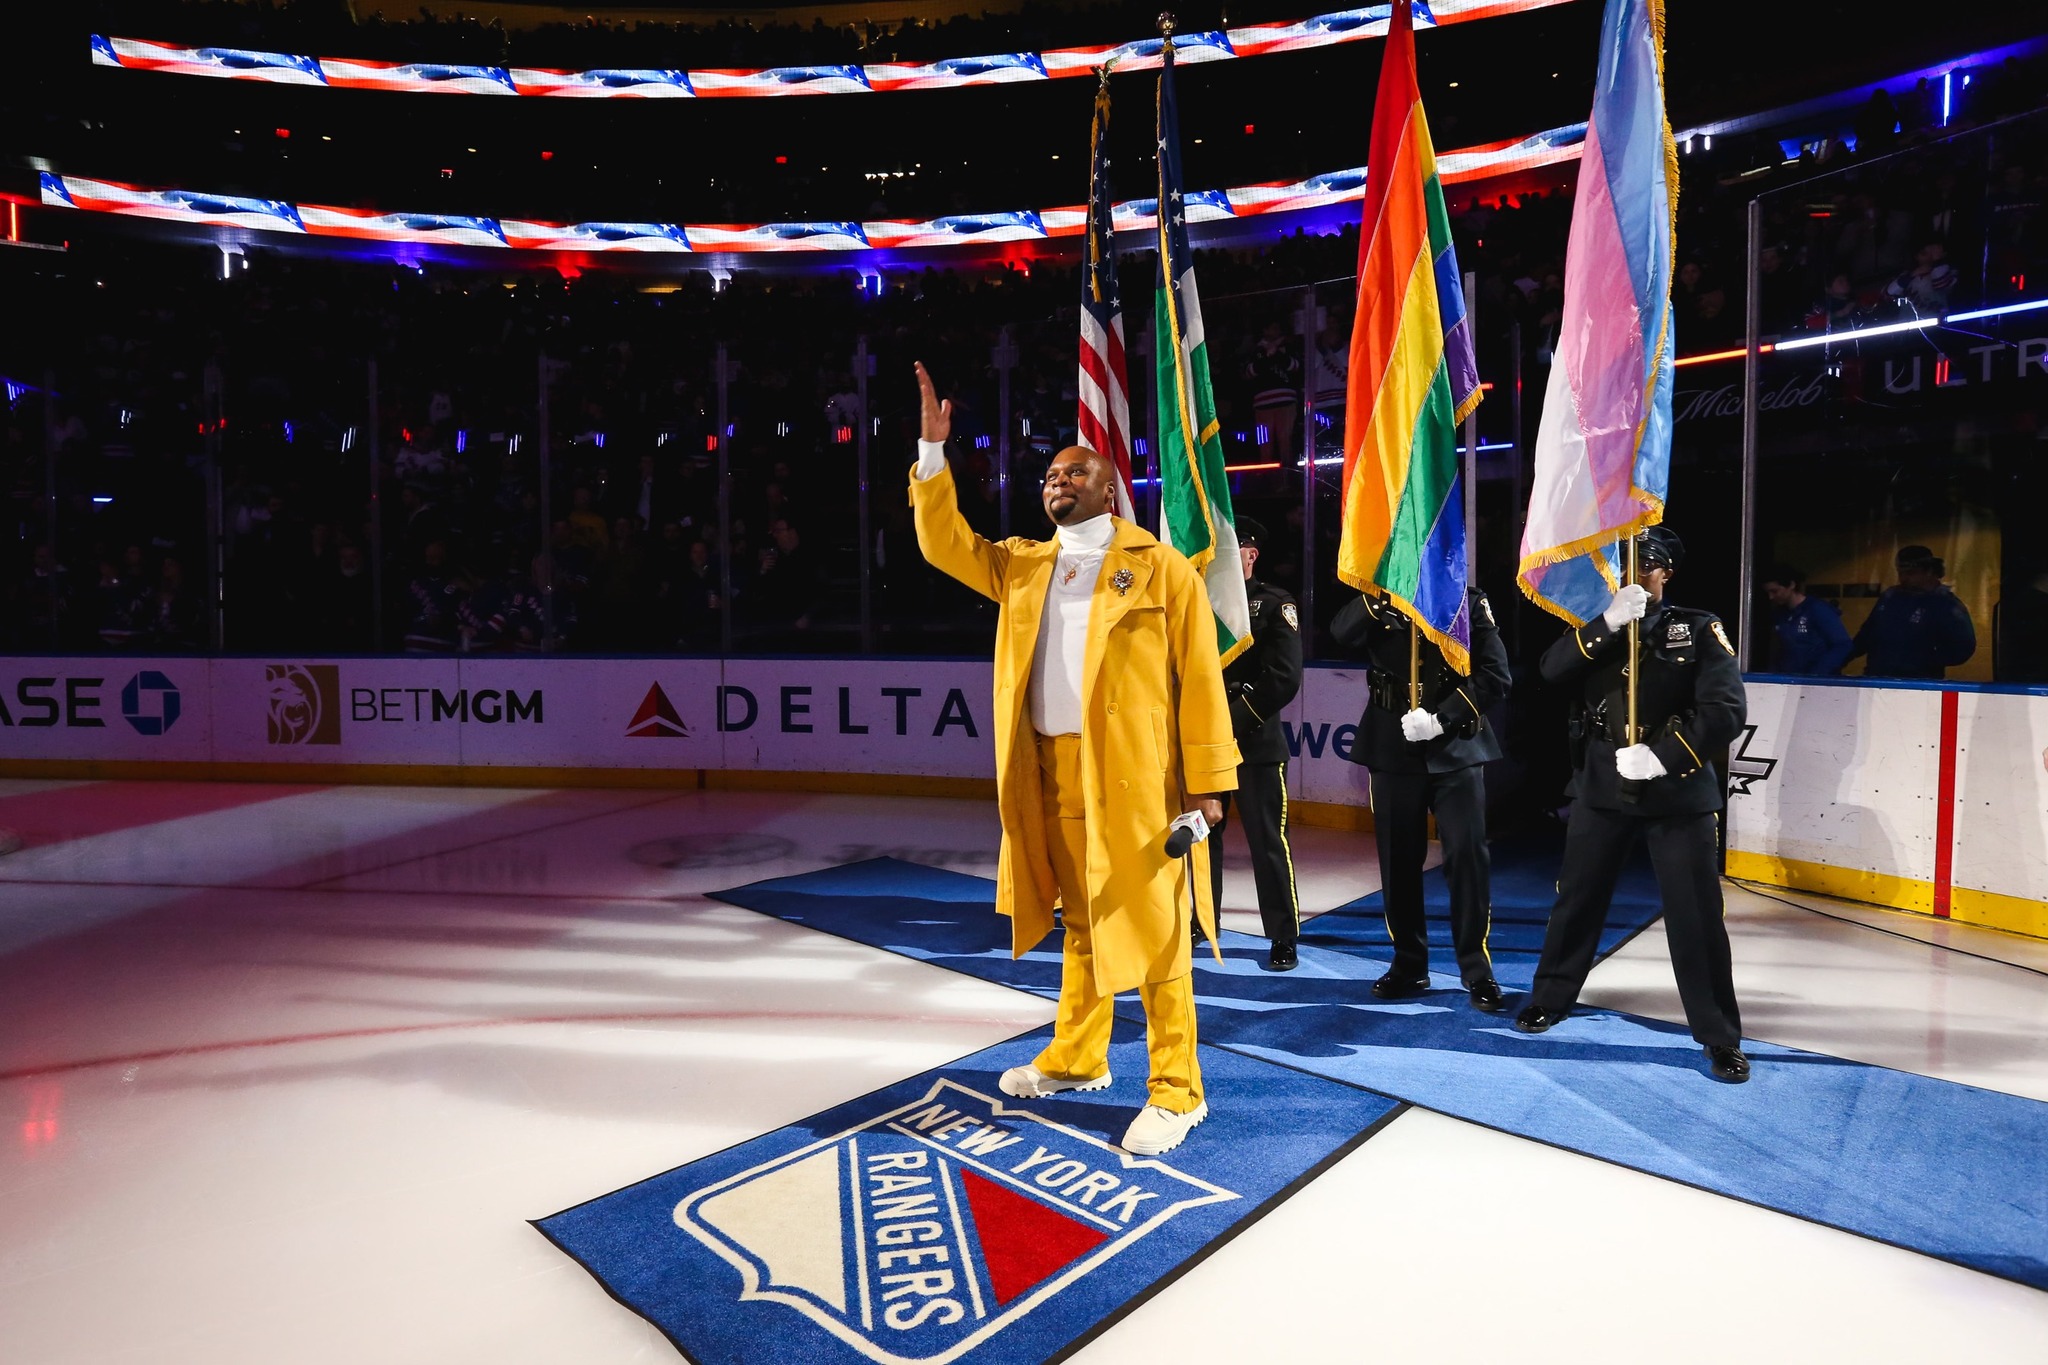 New York Rangers reveal 2020 NHL All-Star jersey design